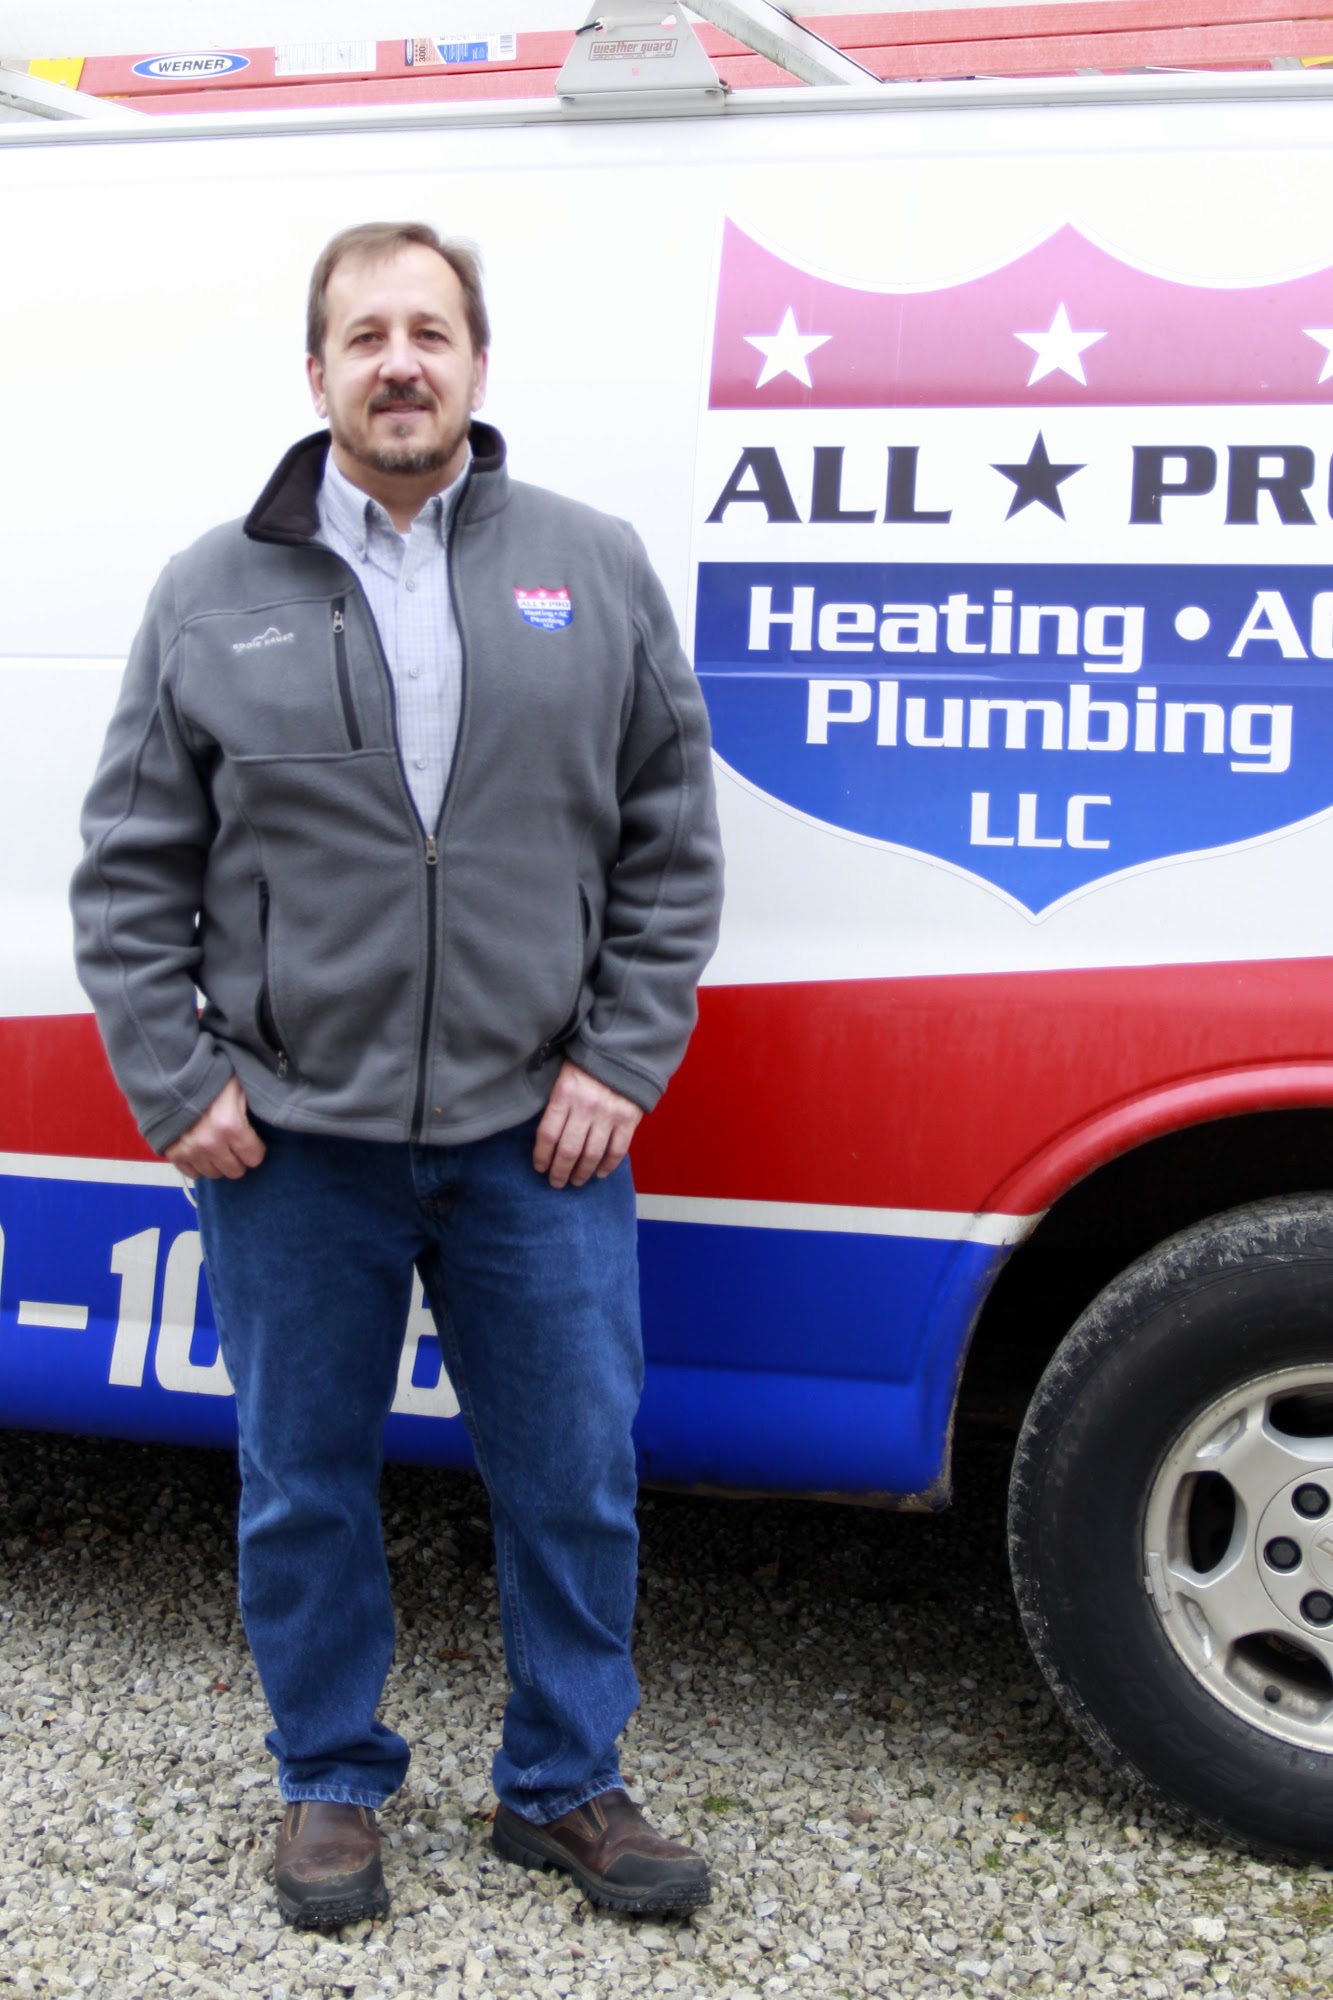 All Pro Heating AC Plumbing, LLC 1100 S Washington St, Tuscola Illinois 61953